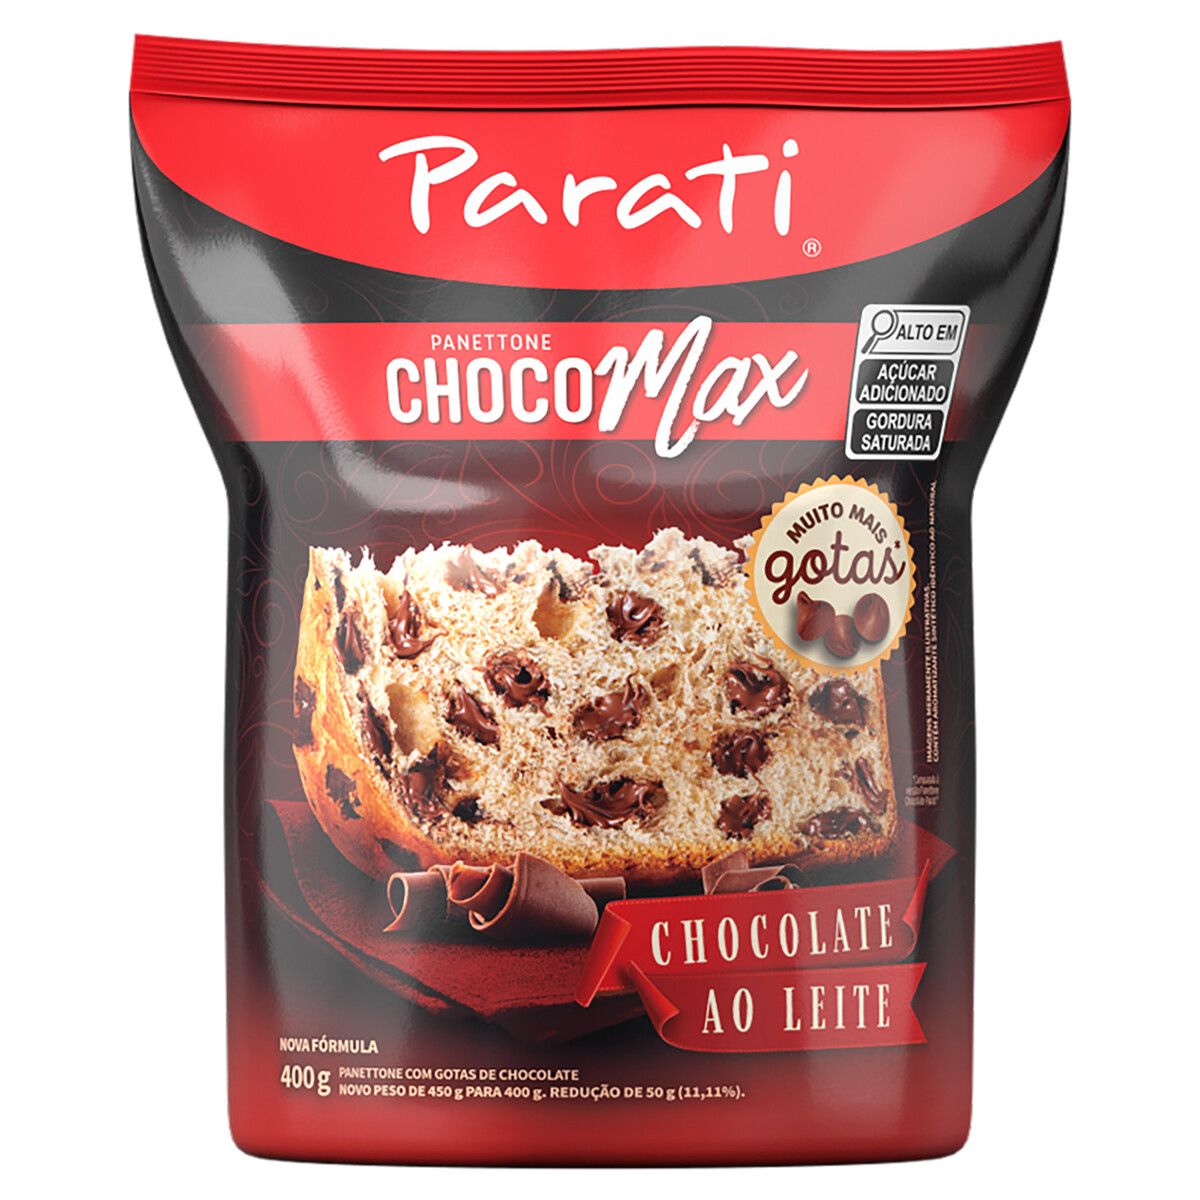 Panettone Parati Choco Max Chocolate ao Leite 400g